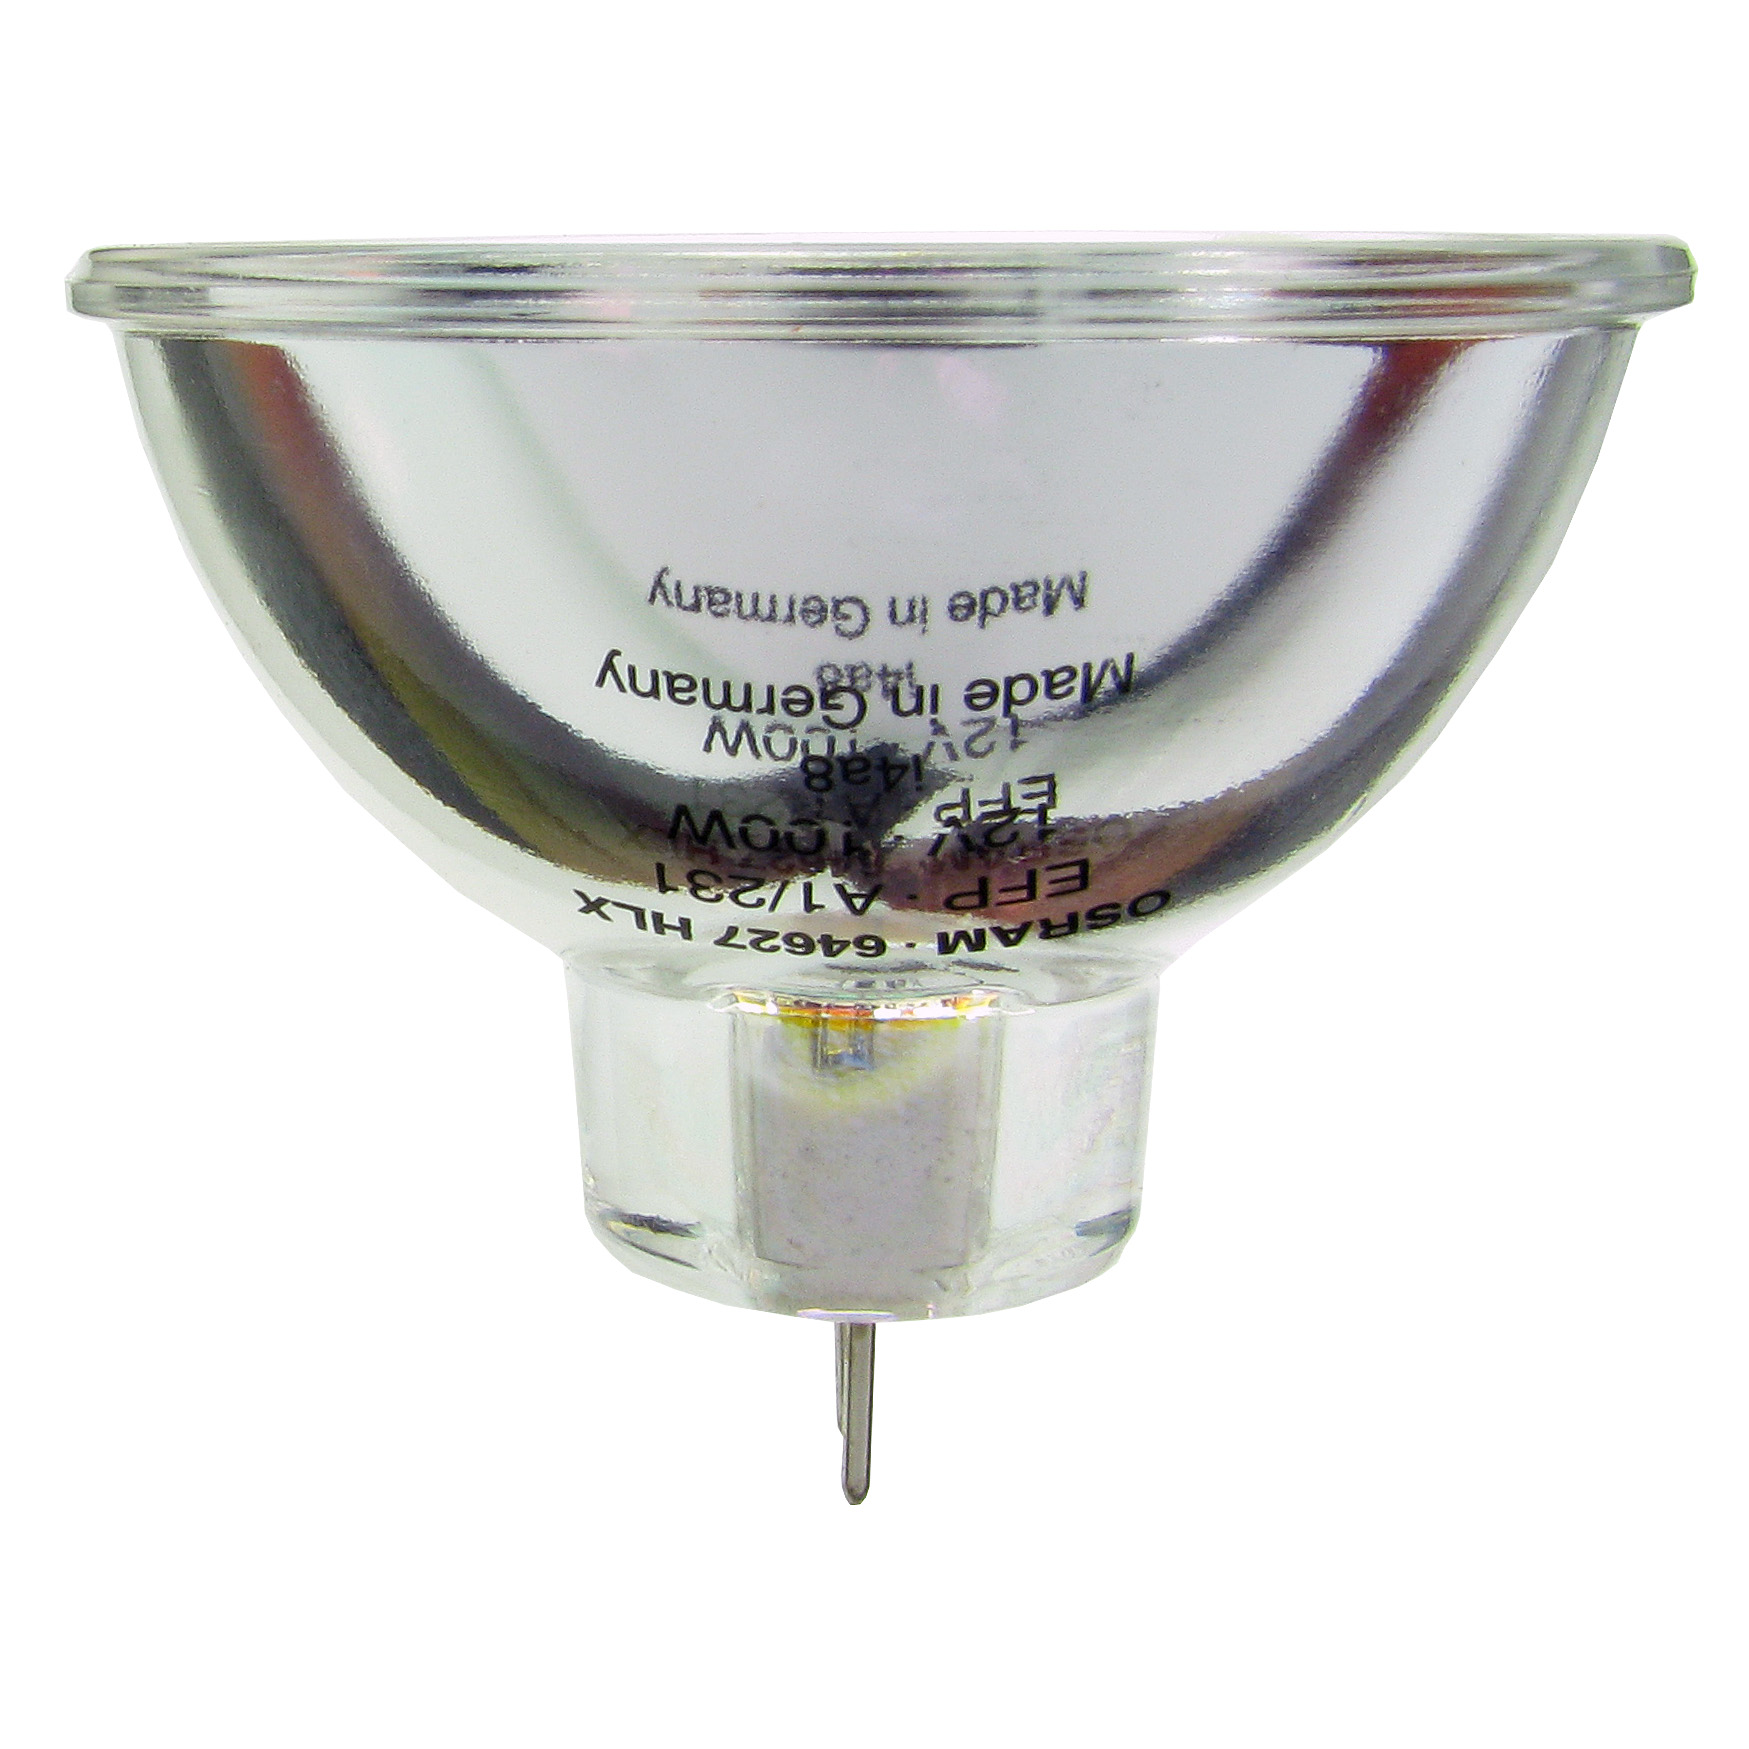 A1/231 EFP 12v 100w GZ6.35 64627 Osram XENOPHOT Bulb Lamp